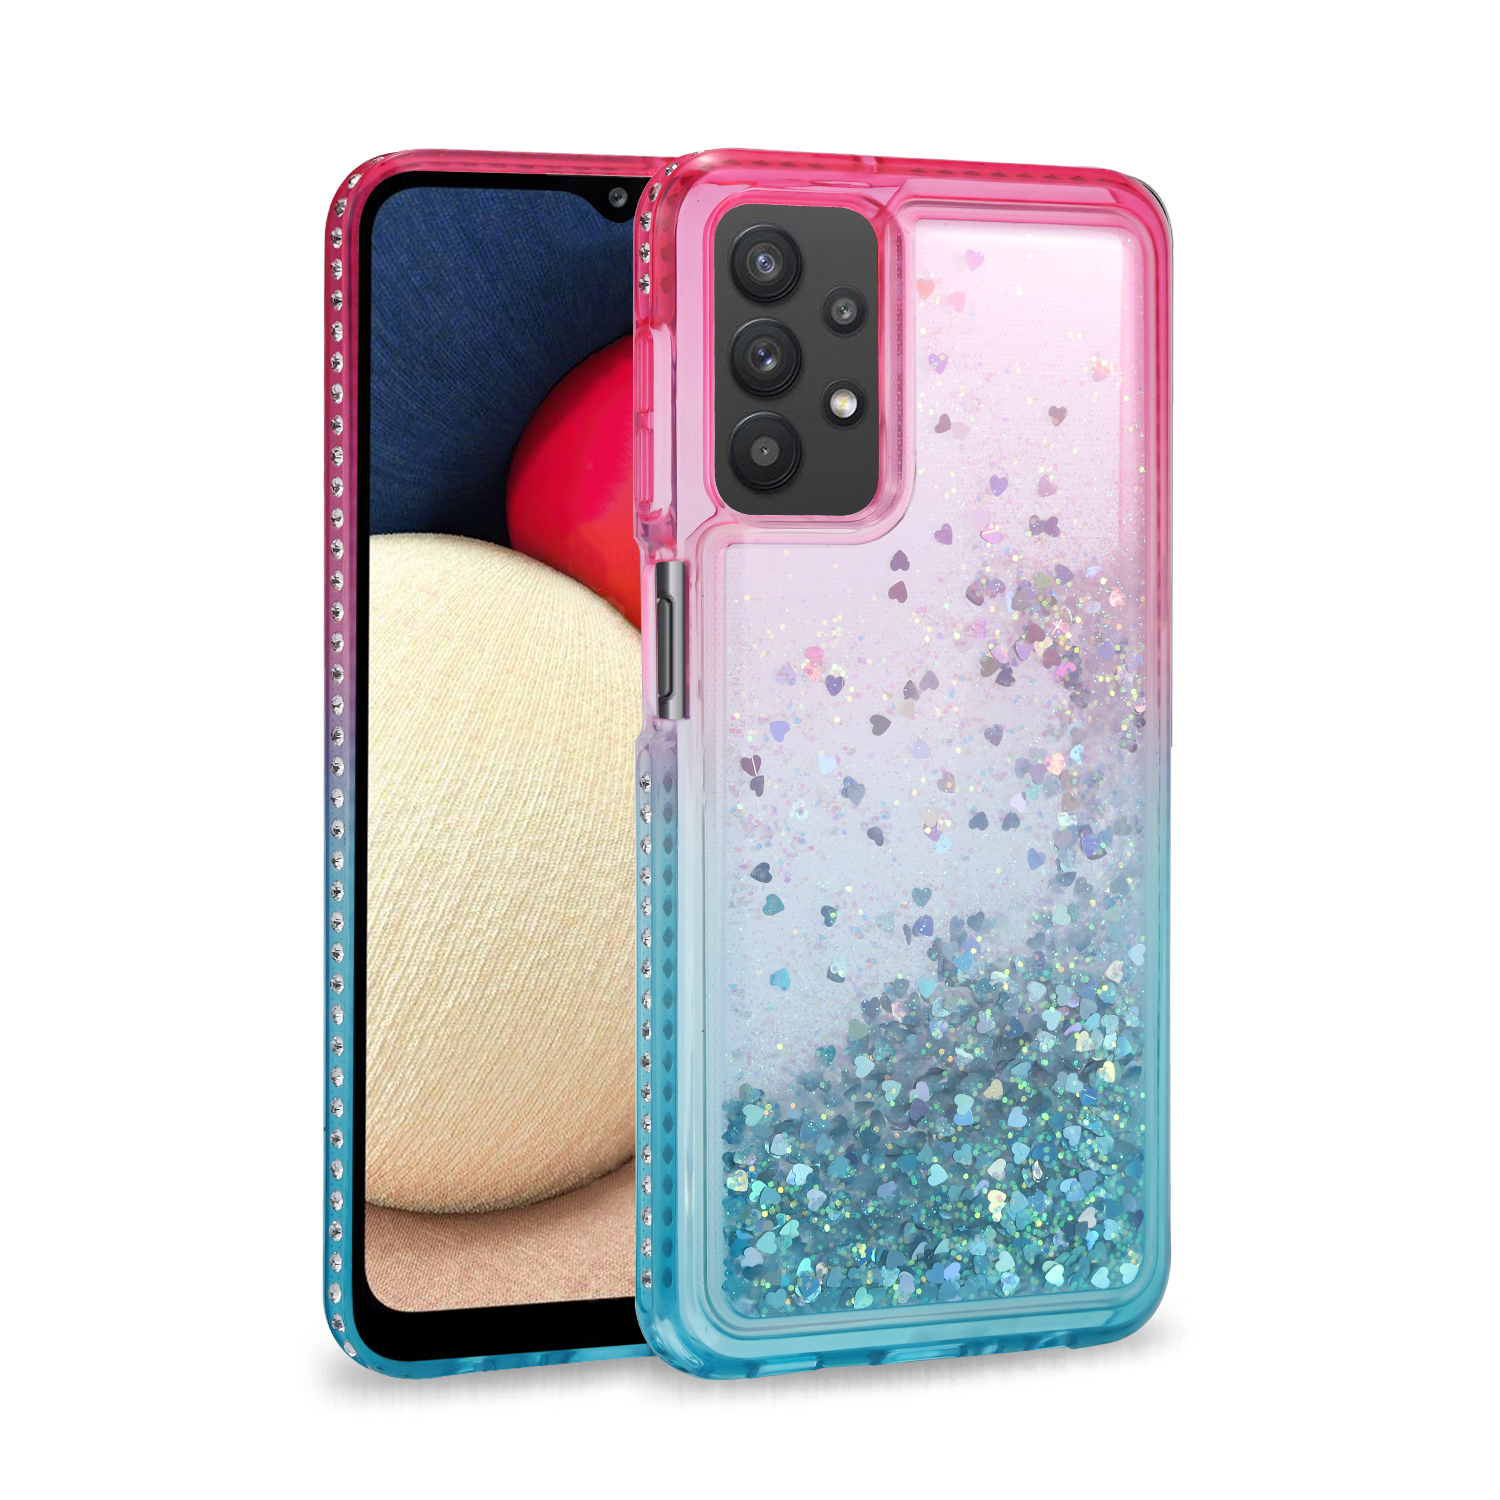 Samsung Galaxy A32 5G Phone Case, Slim Liquid Glitter Dual Colors Stylish for Samsung Galaxy A32 5G Phone Case Pink/Blue - image 1 of 4